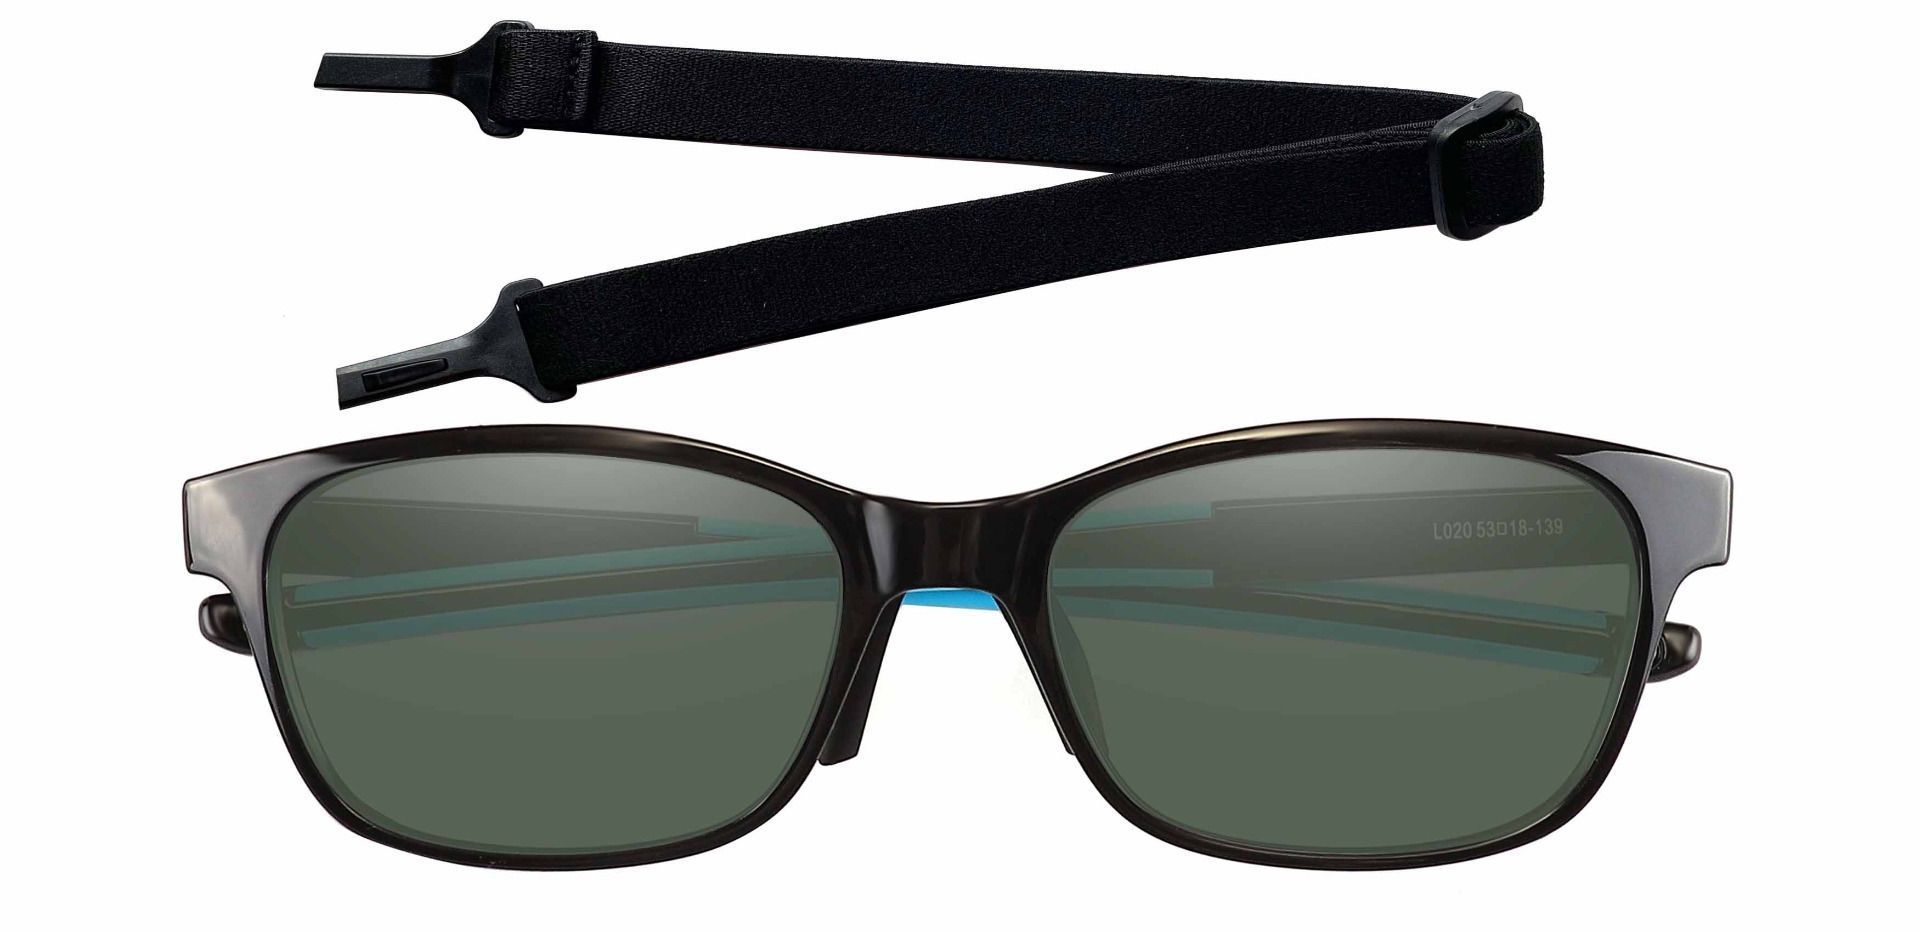 Higgins Rectangle Non-Rx Sunglasses - Black Frame With Green Lenses